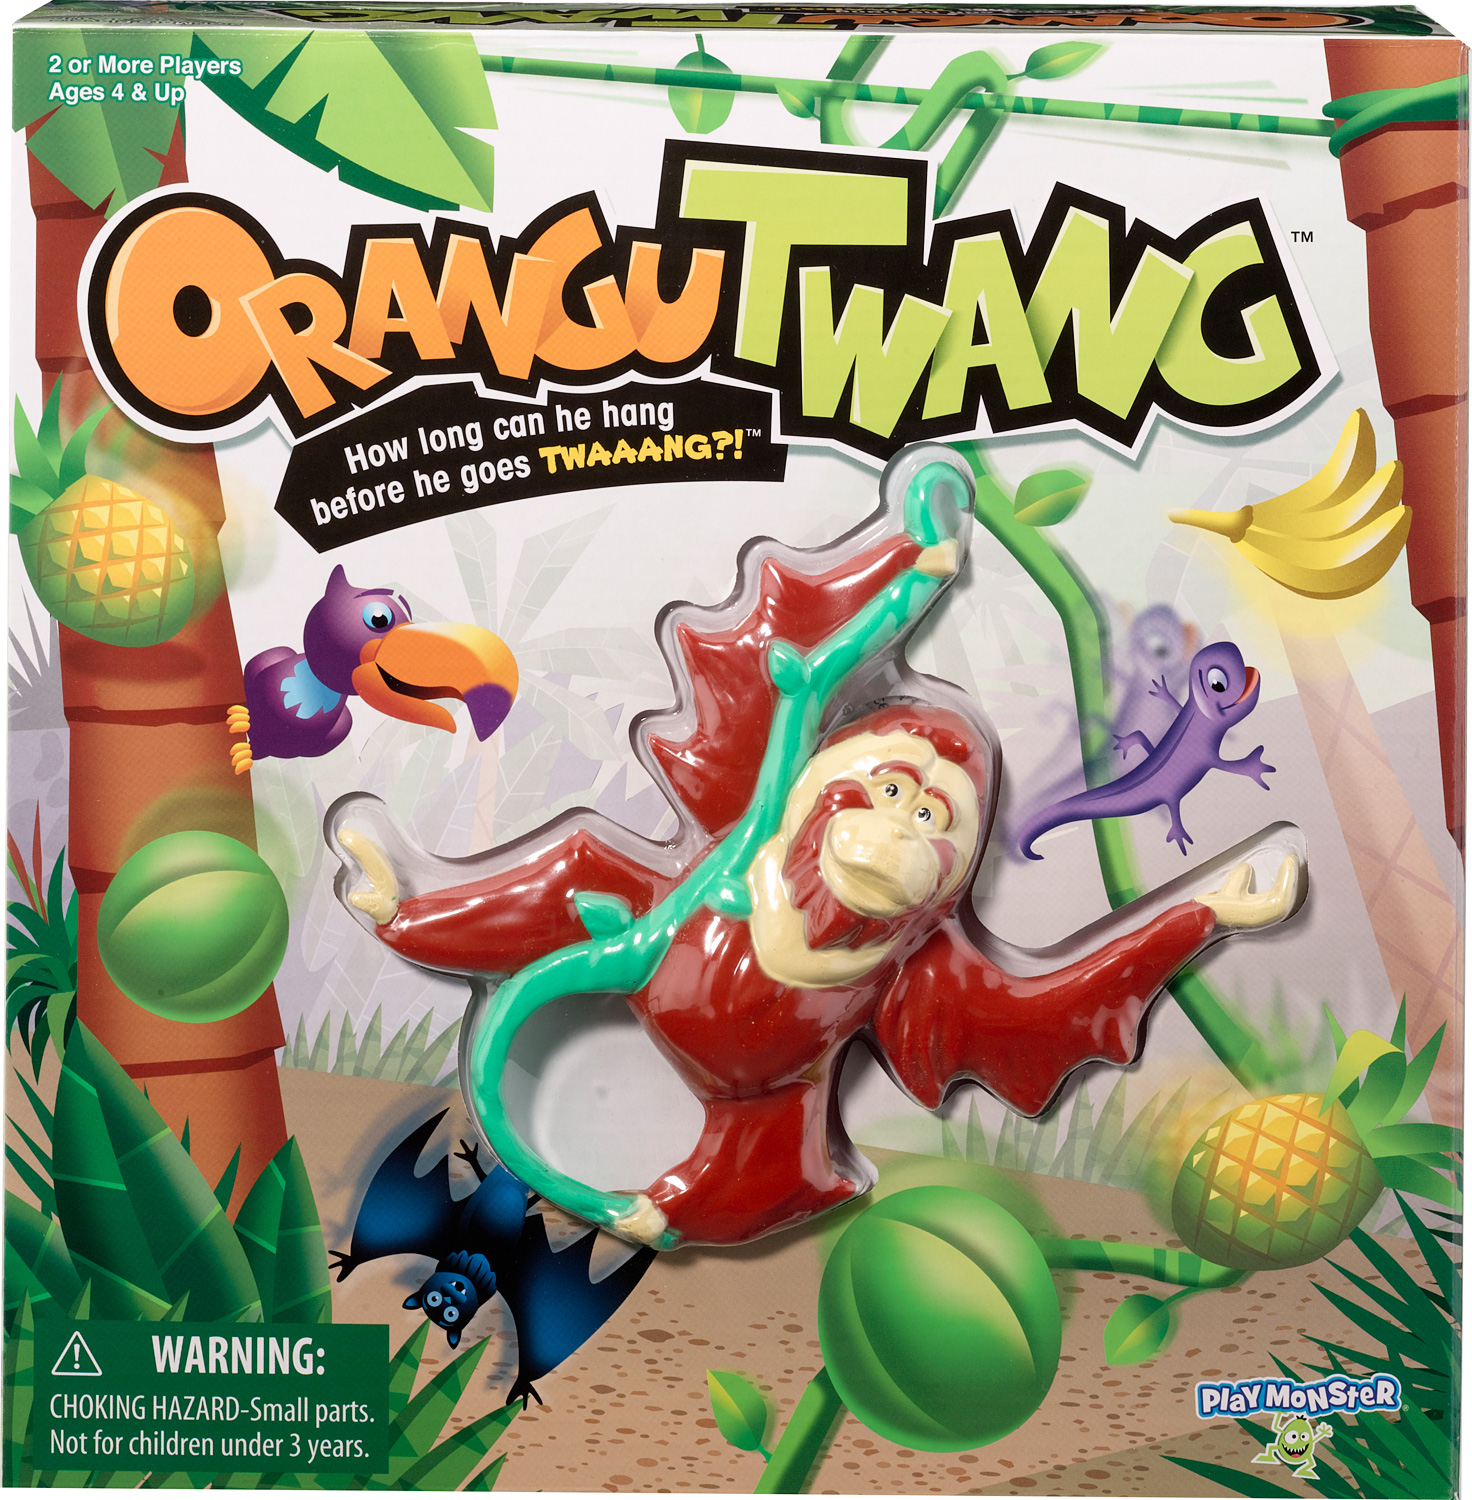 Orangutwang Kids Game - How Long Can He Hang Before He Goes Twaaang?!